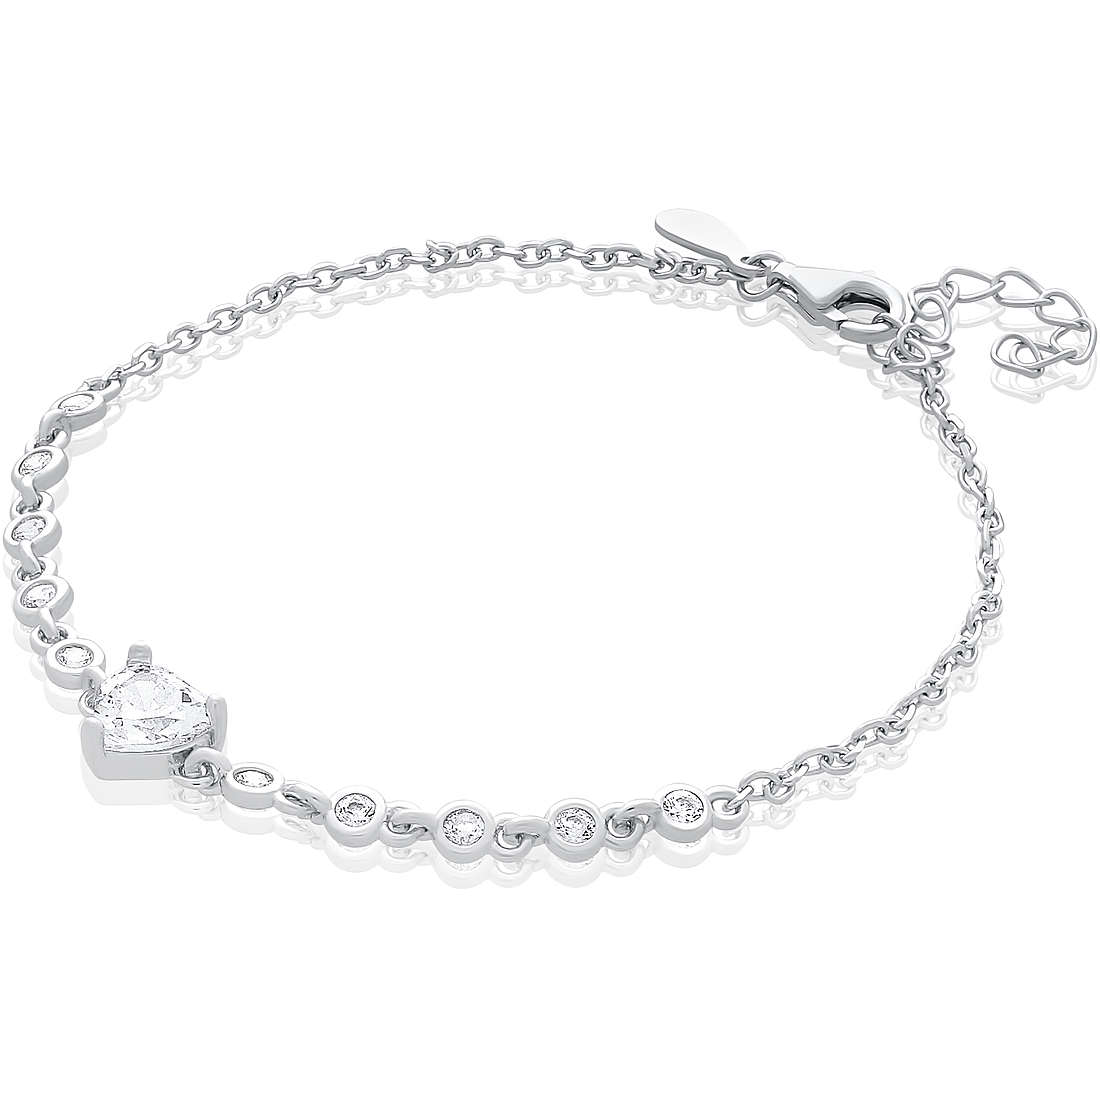 bracelet woman Chain 925 Silver jewel GioiaPura INS028BR329RHWH